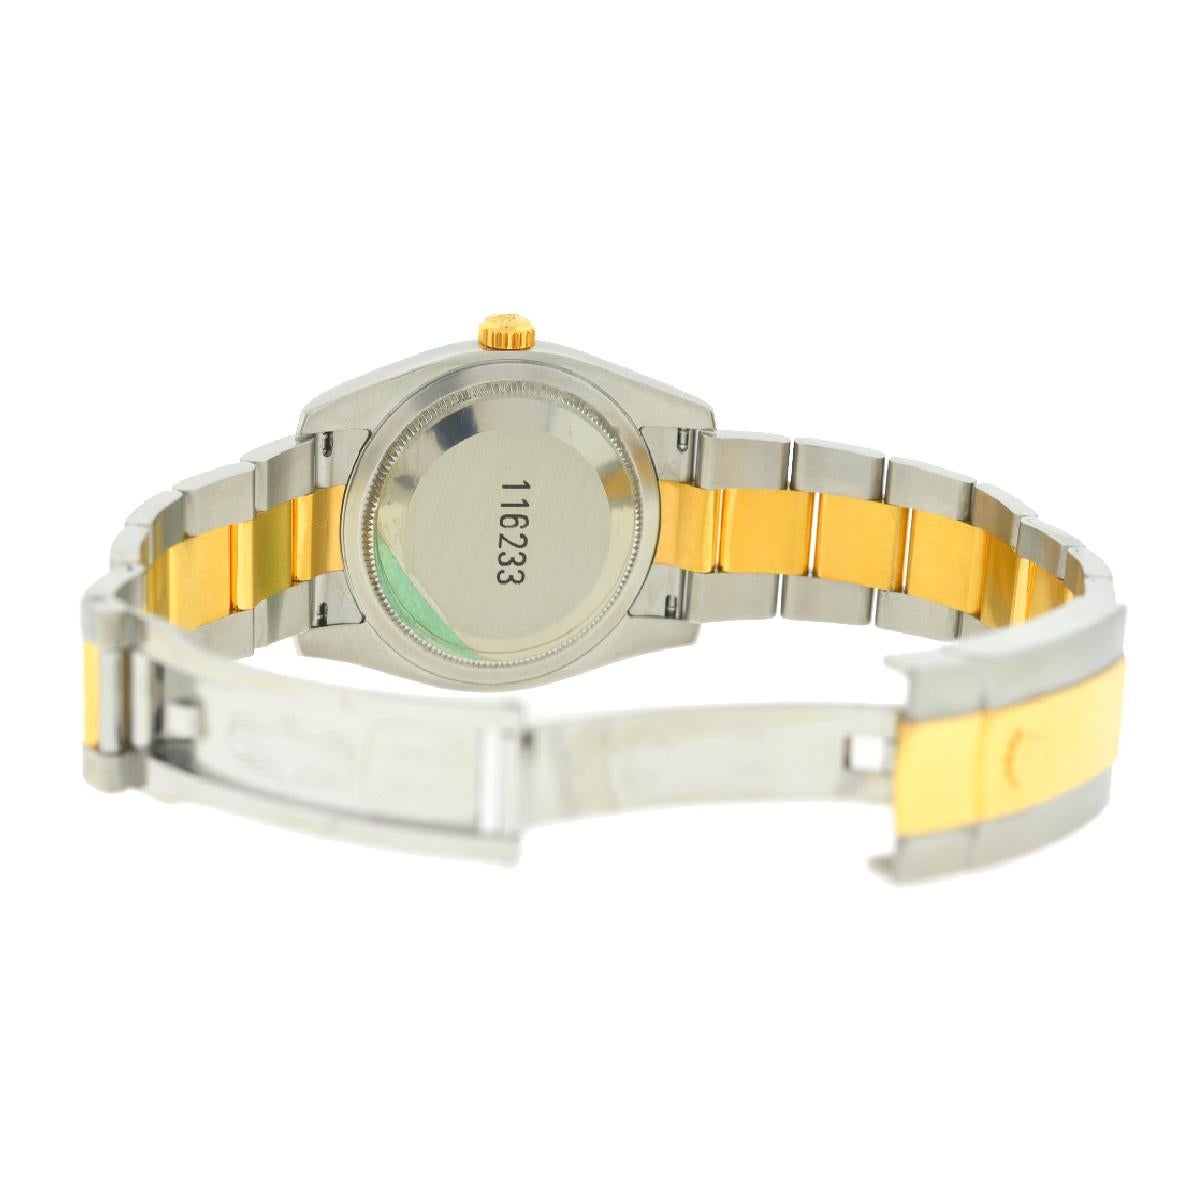 Rolex 116233 Datejust Two-Tone Factory Original Diamonds Watch 4